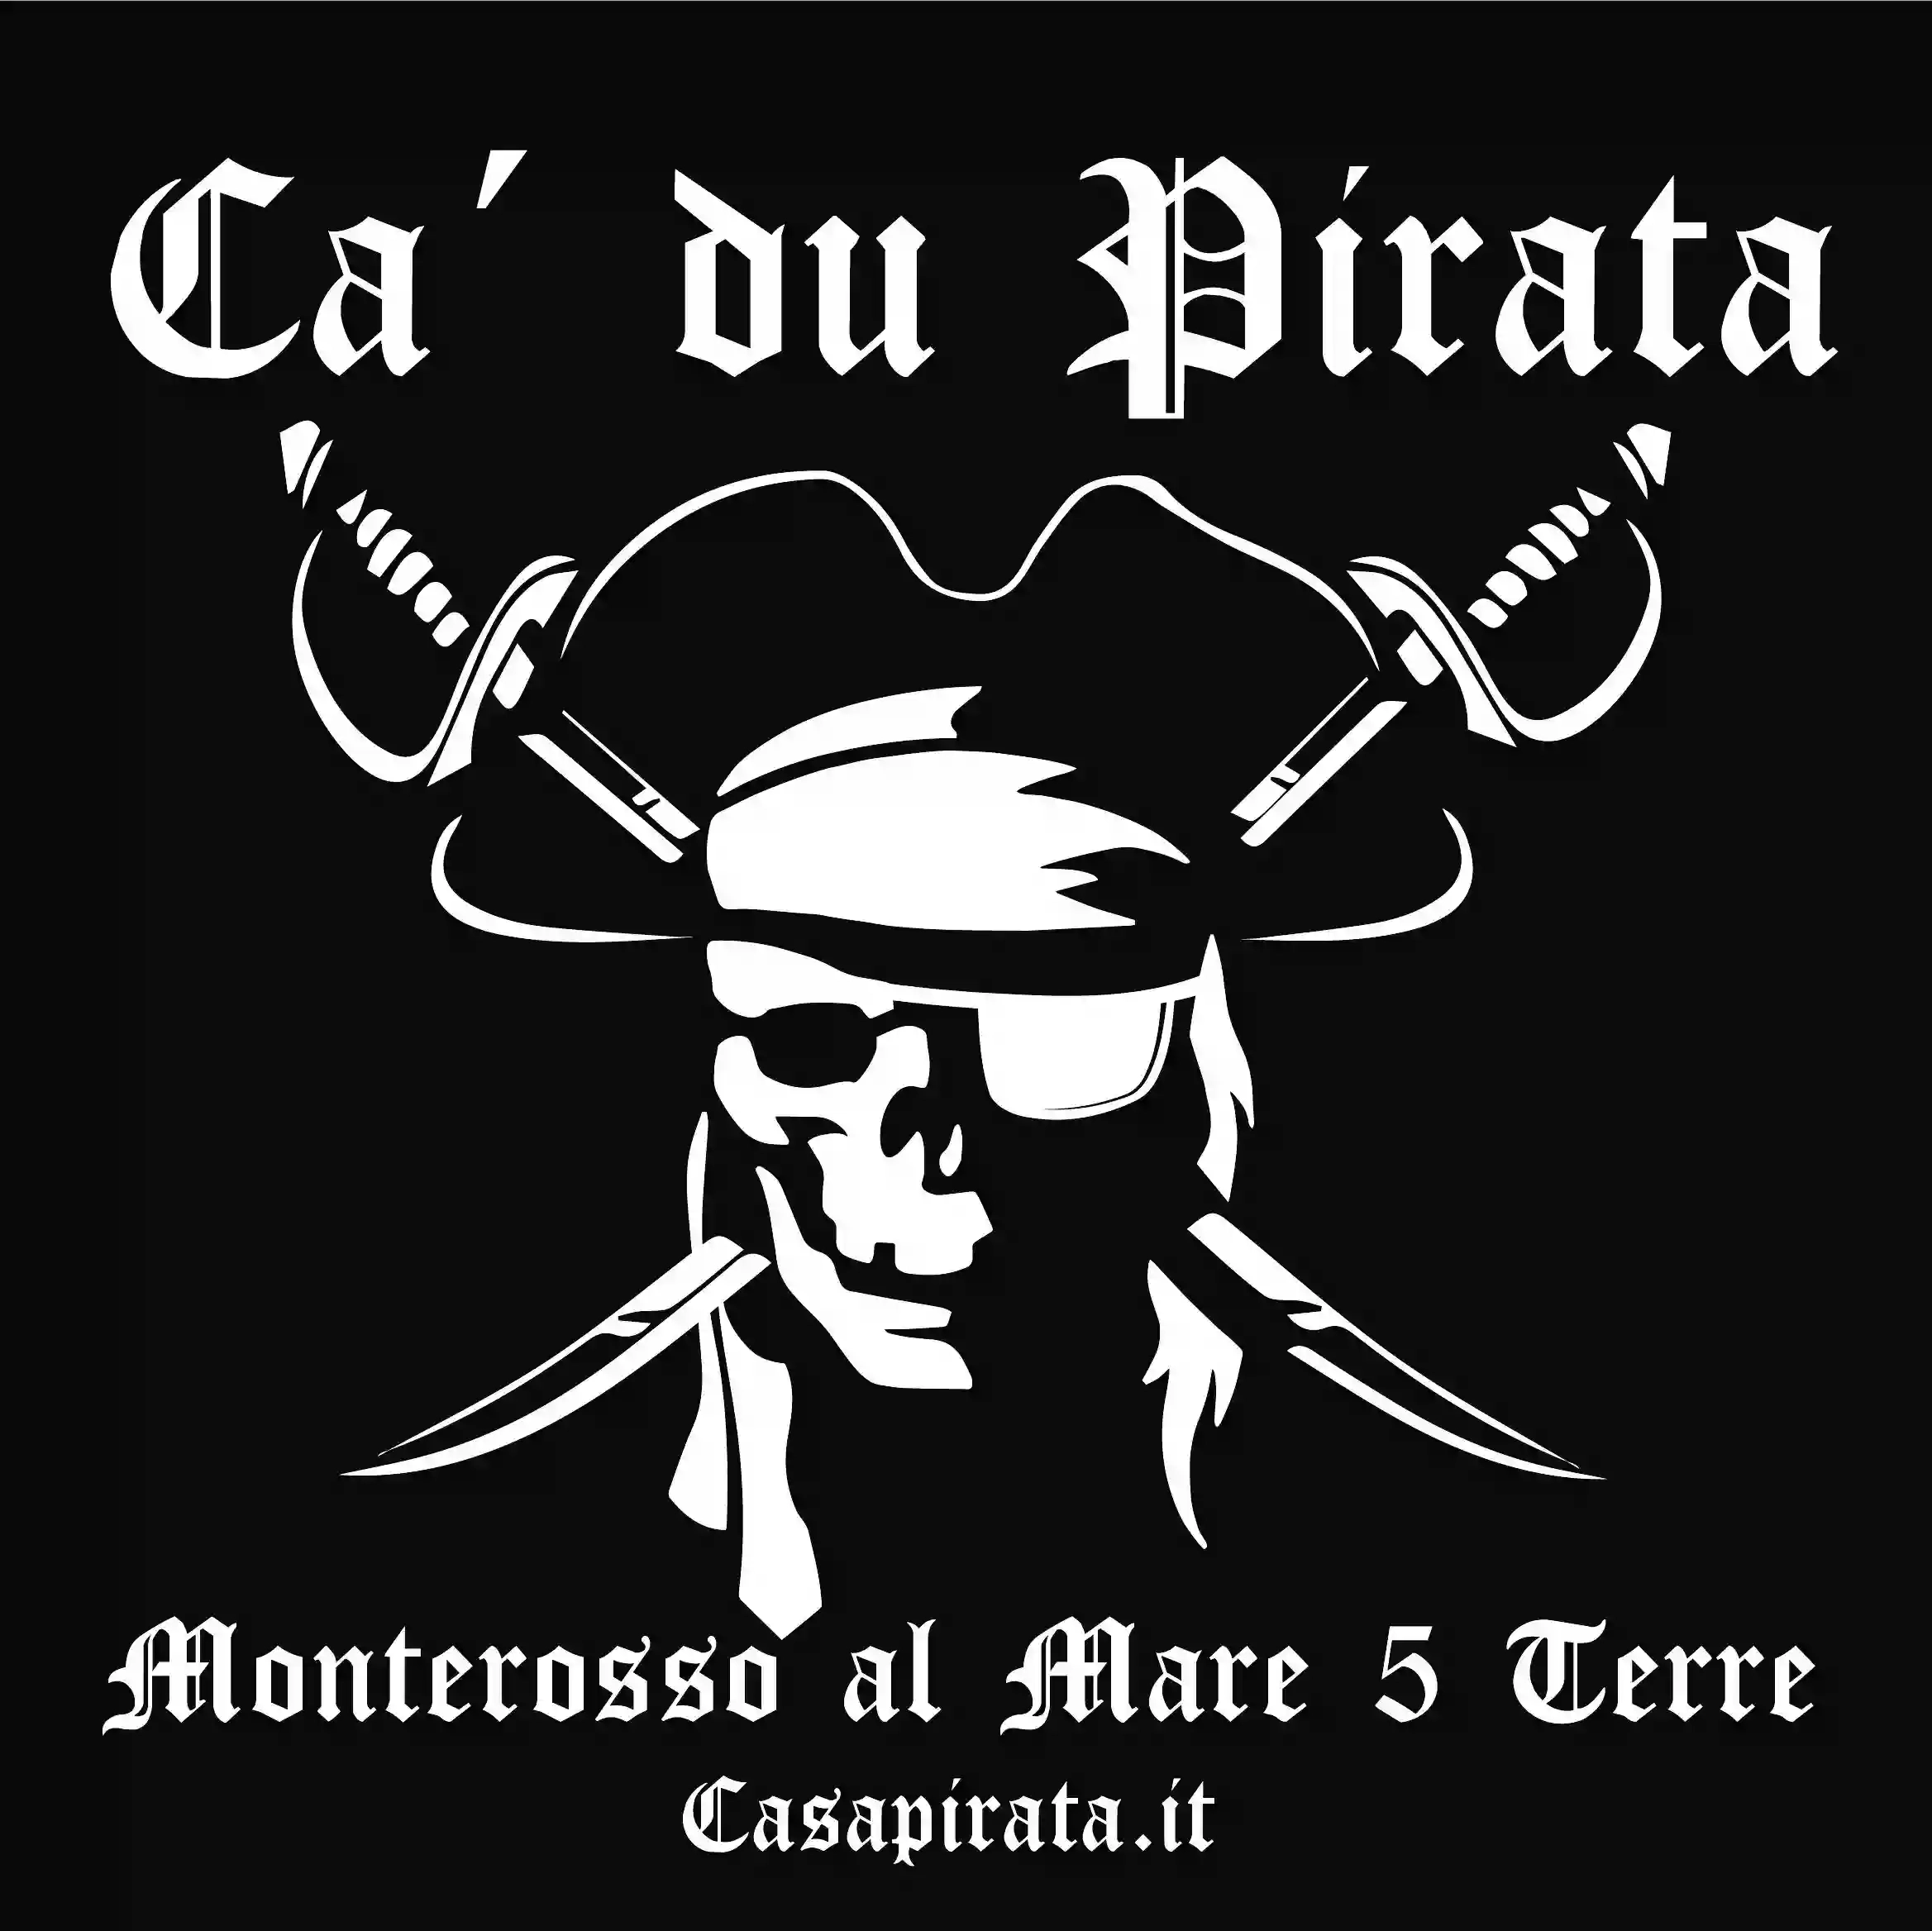 Ca‘du Pirata